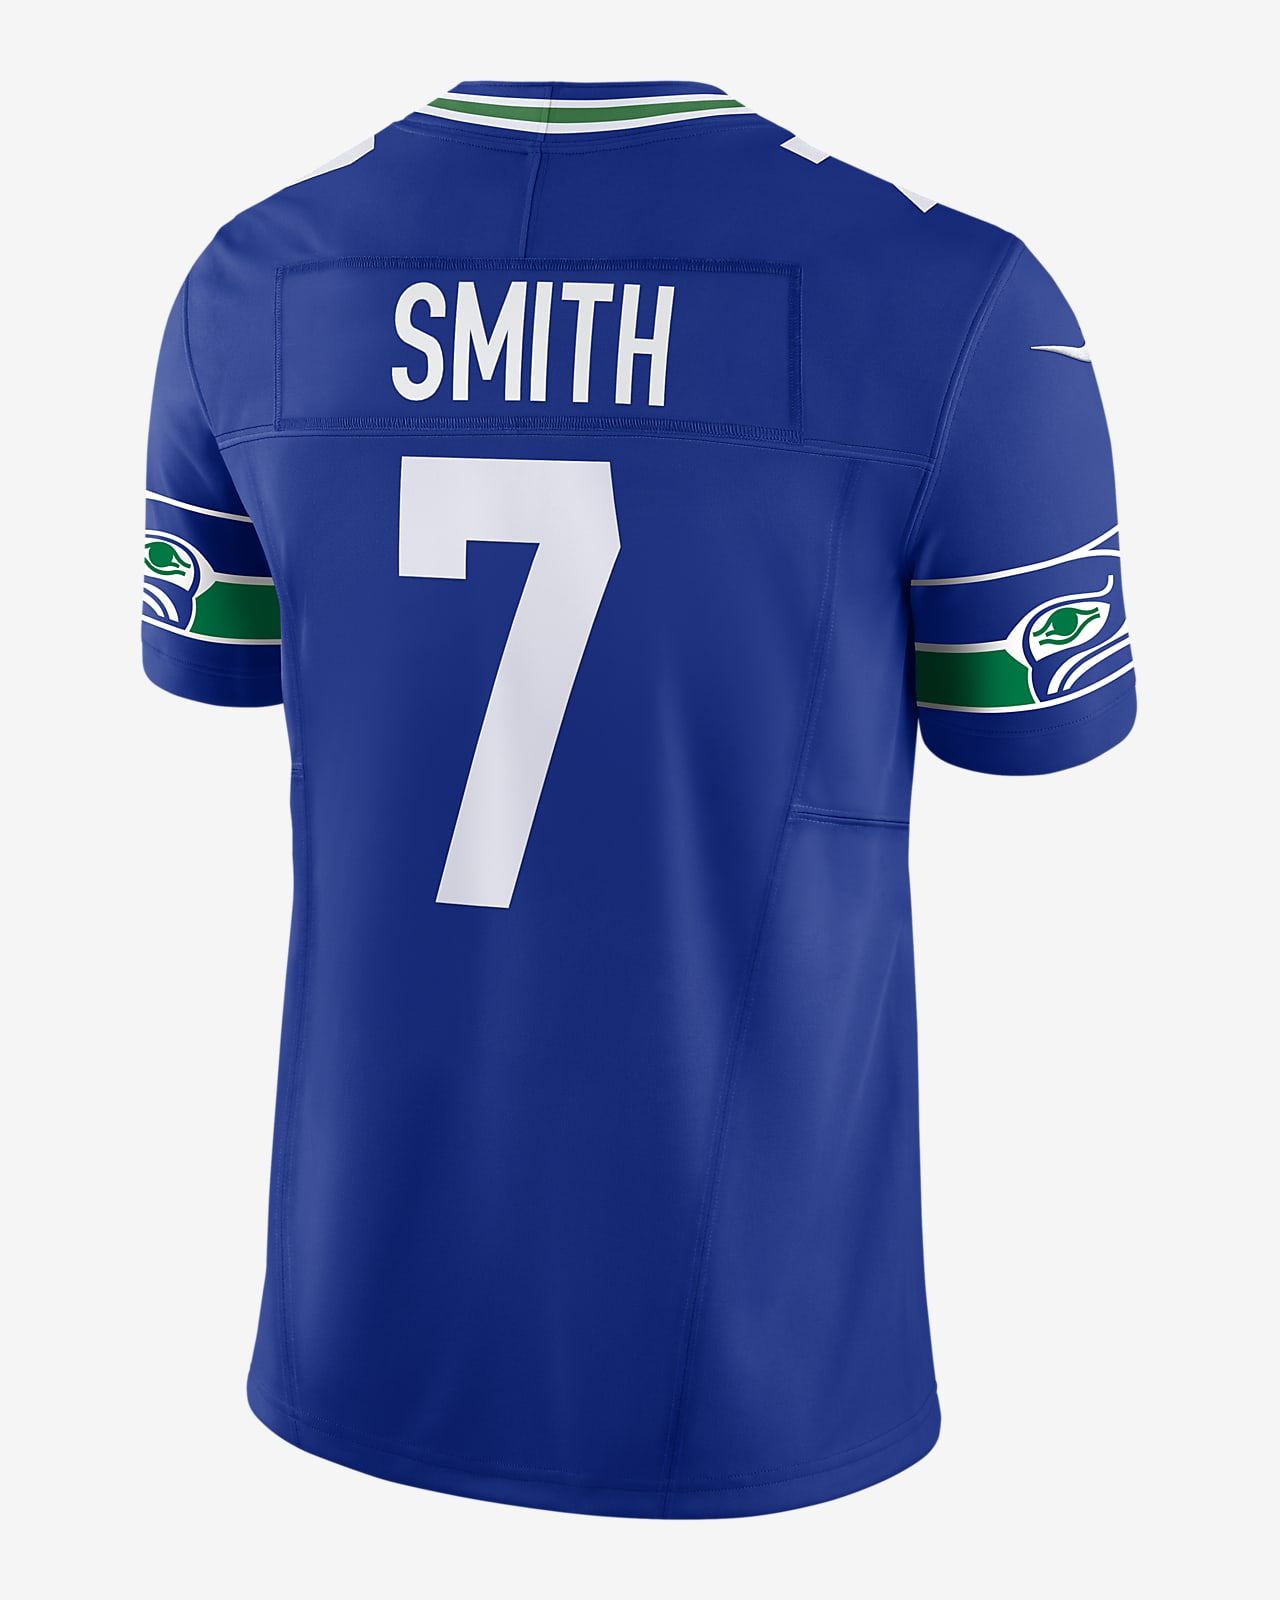 Geno Smith Seattle Seahawks Men's Nike Dri-FIT NFL Limited Football Jersey.